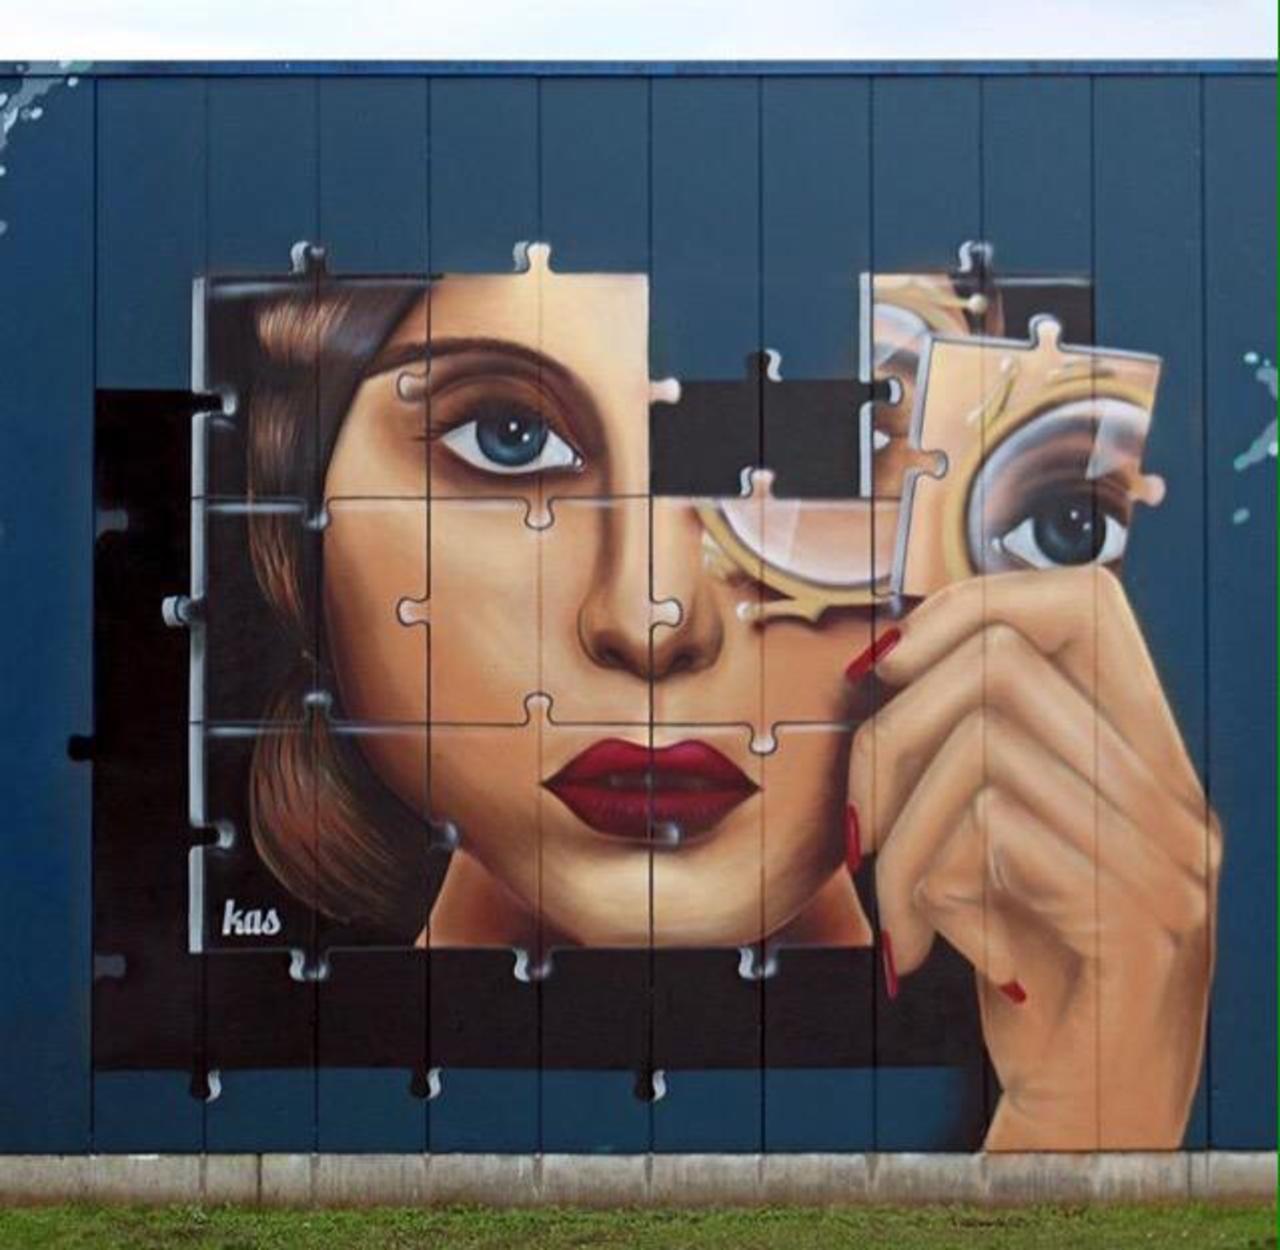 Kas Art's new Street Art "Piece of me" in Aalst Belgium 

#art #graffiti #mural #streetart http://t.co/KunOwoUca8